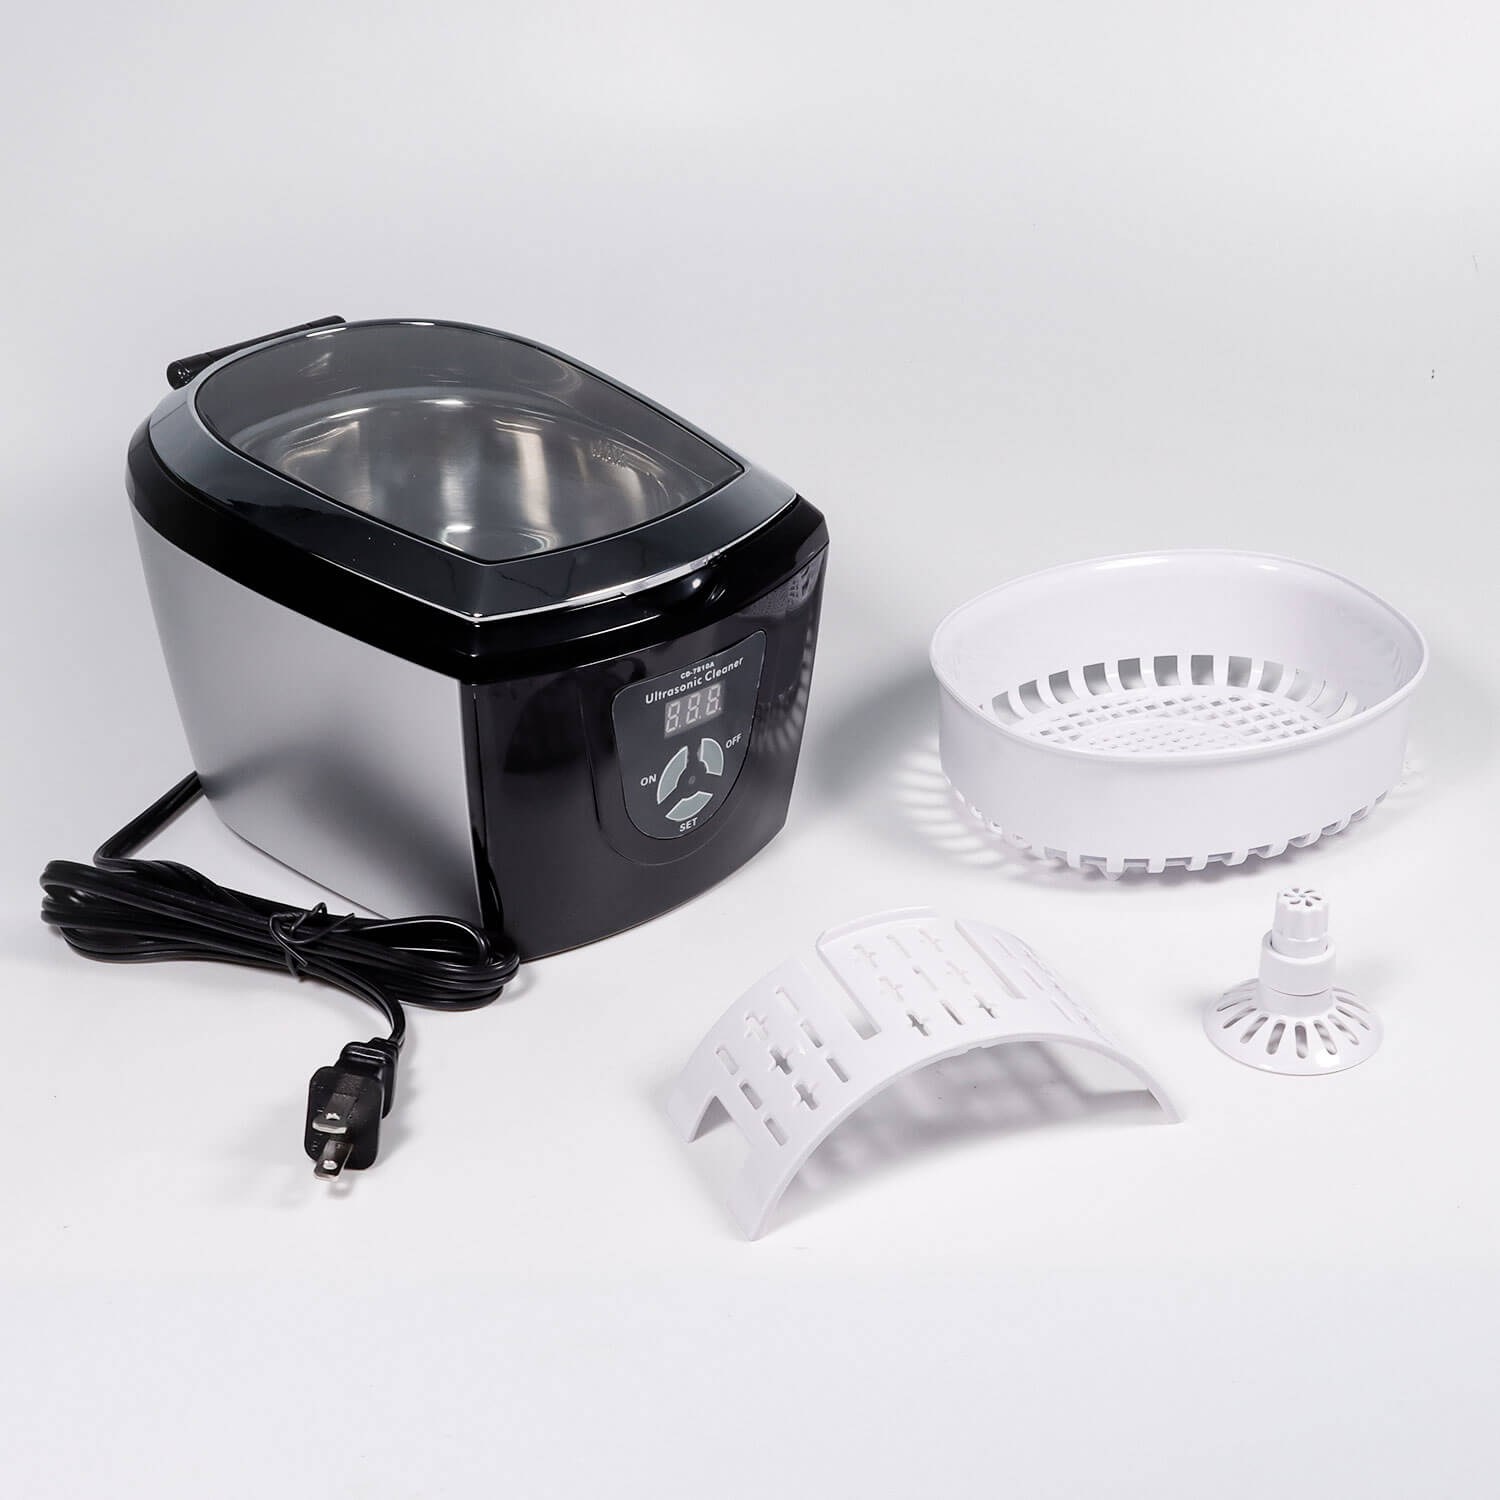 VLOXO CD-7810A Ultrasonic Jewelry Cleaner Machine 750ML 42000Hz - Black